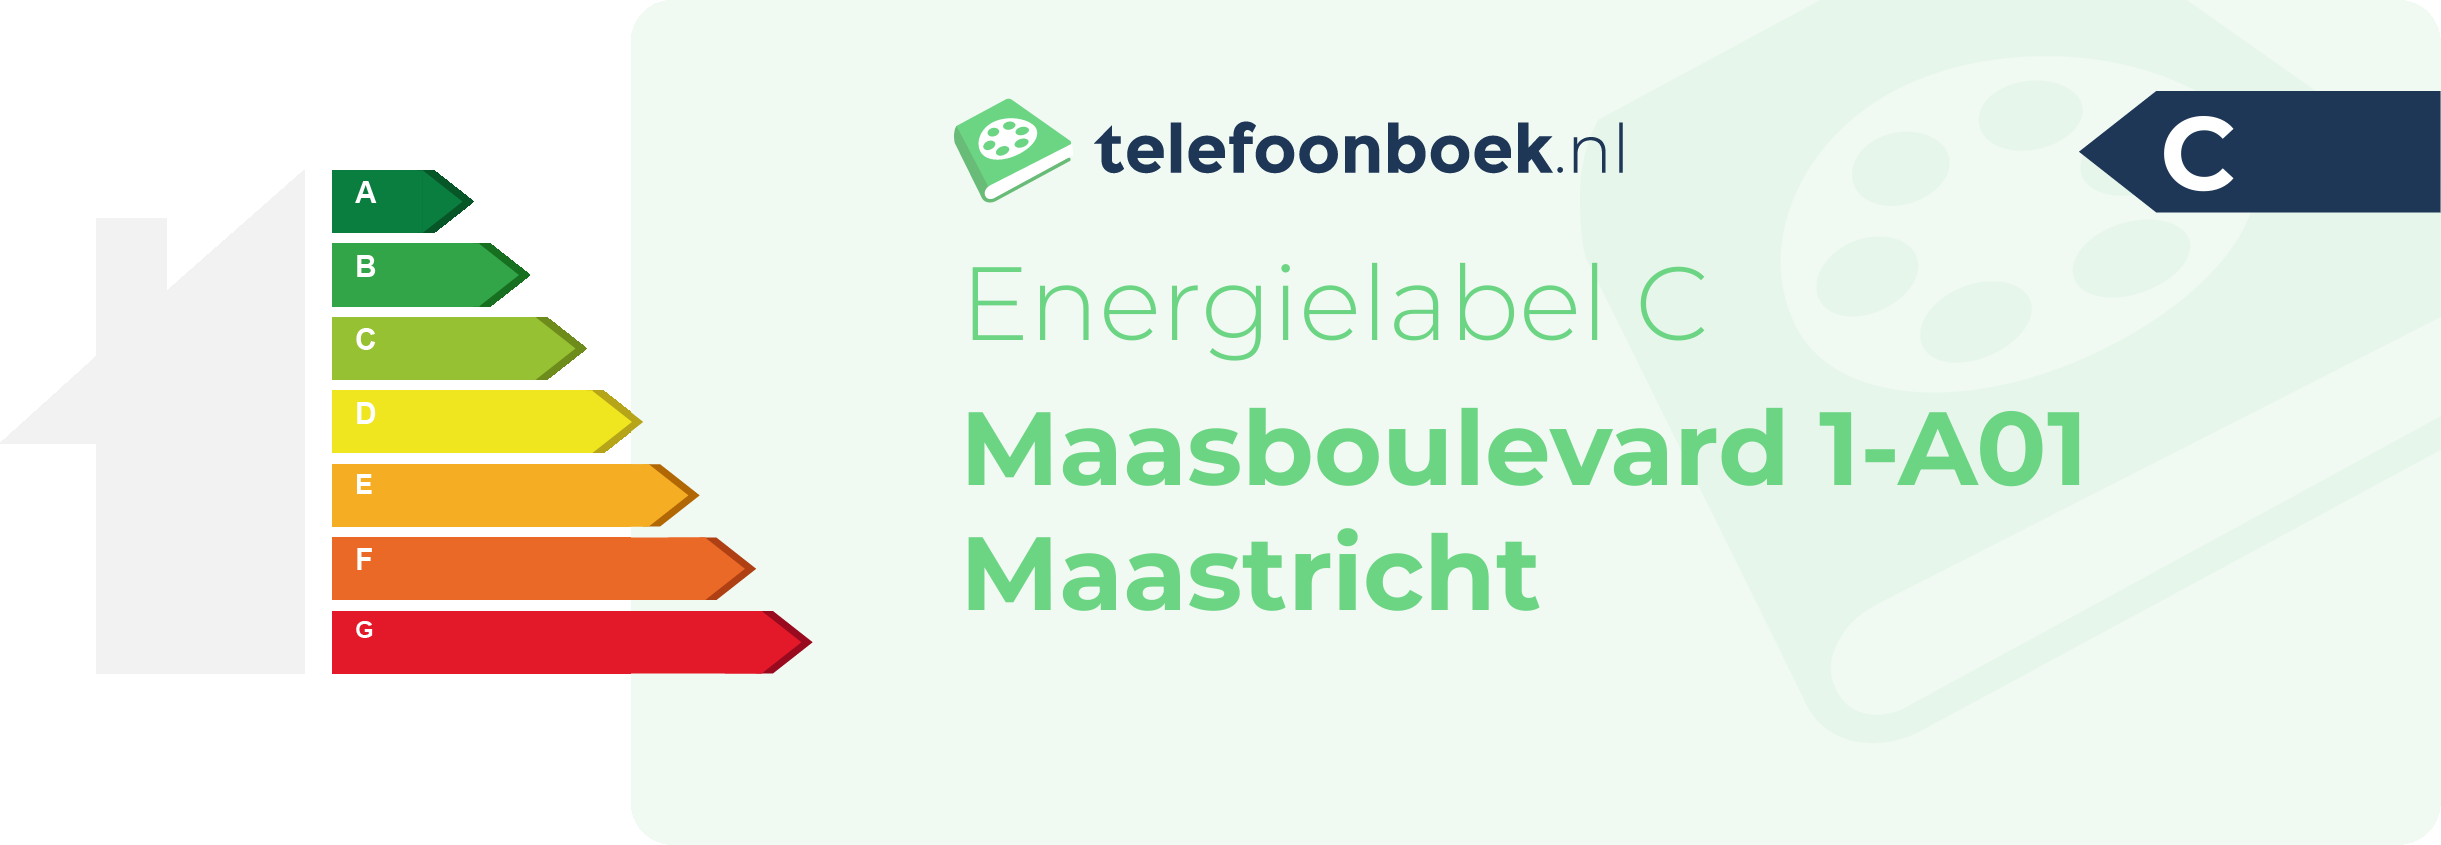 Energielabel Maasboulevard 1-A01 Maastricht